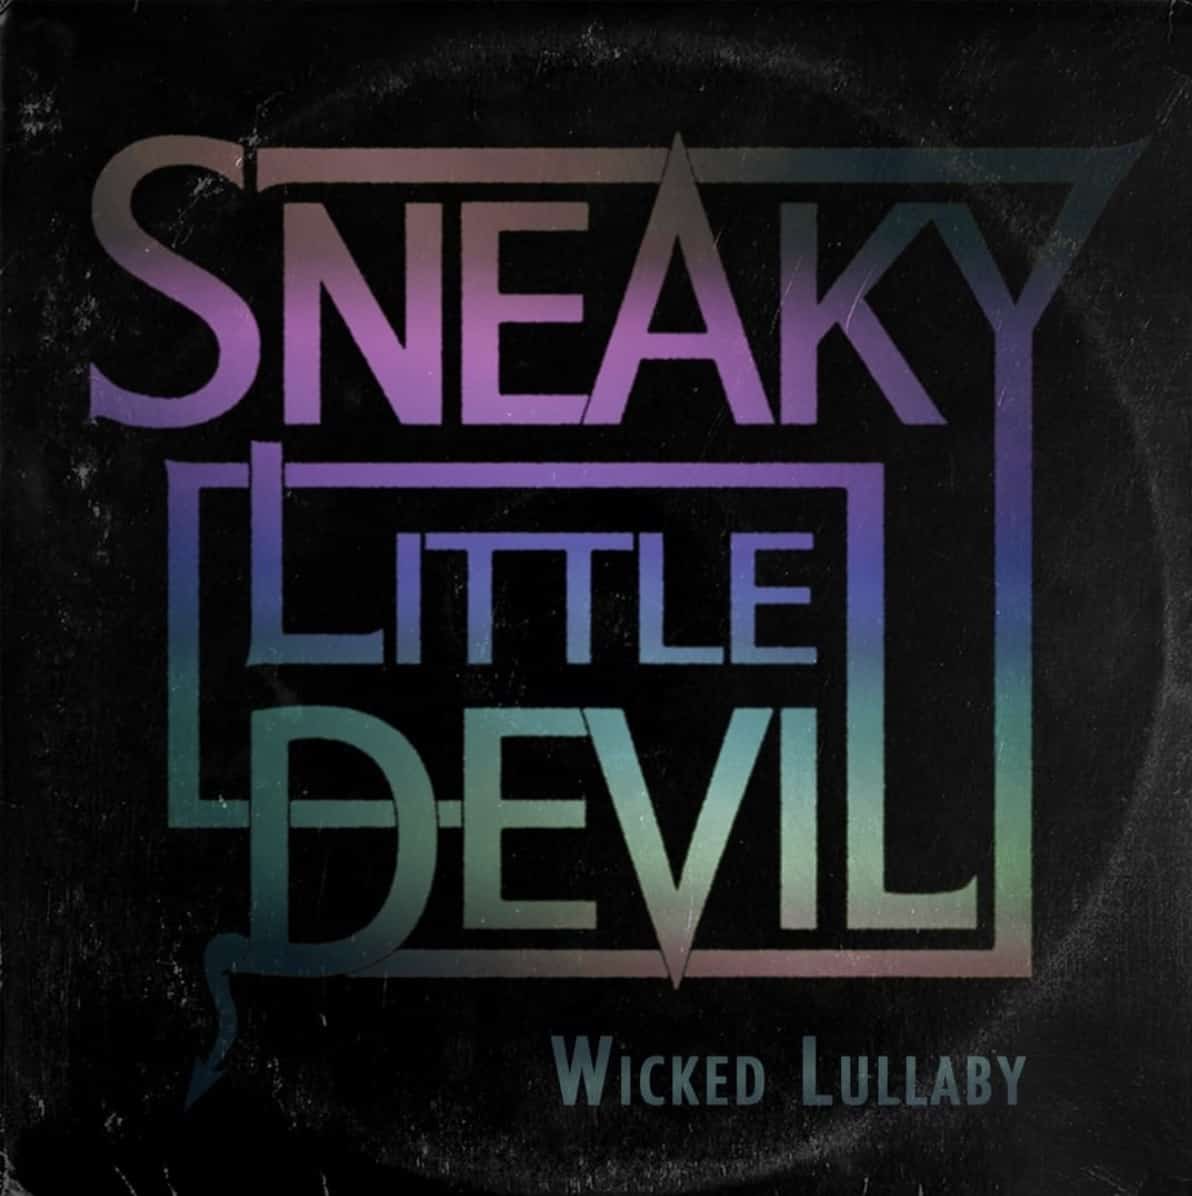 WICKED LULLABY Sneaky Little Devil